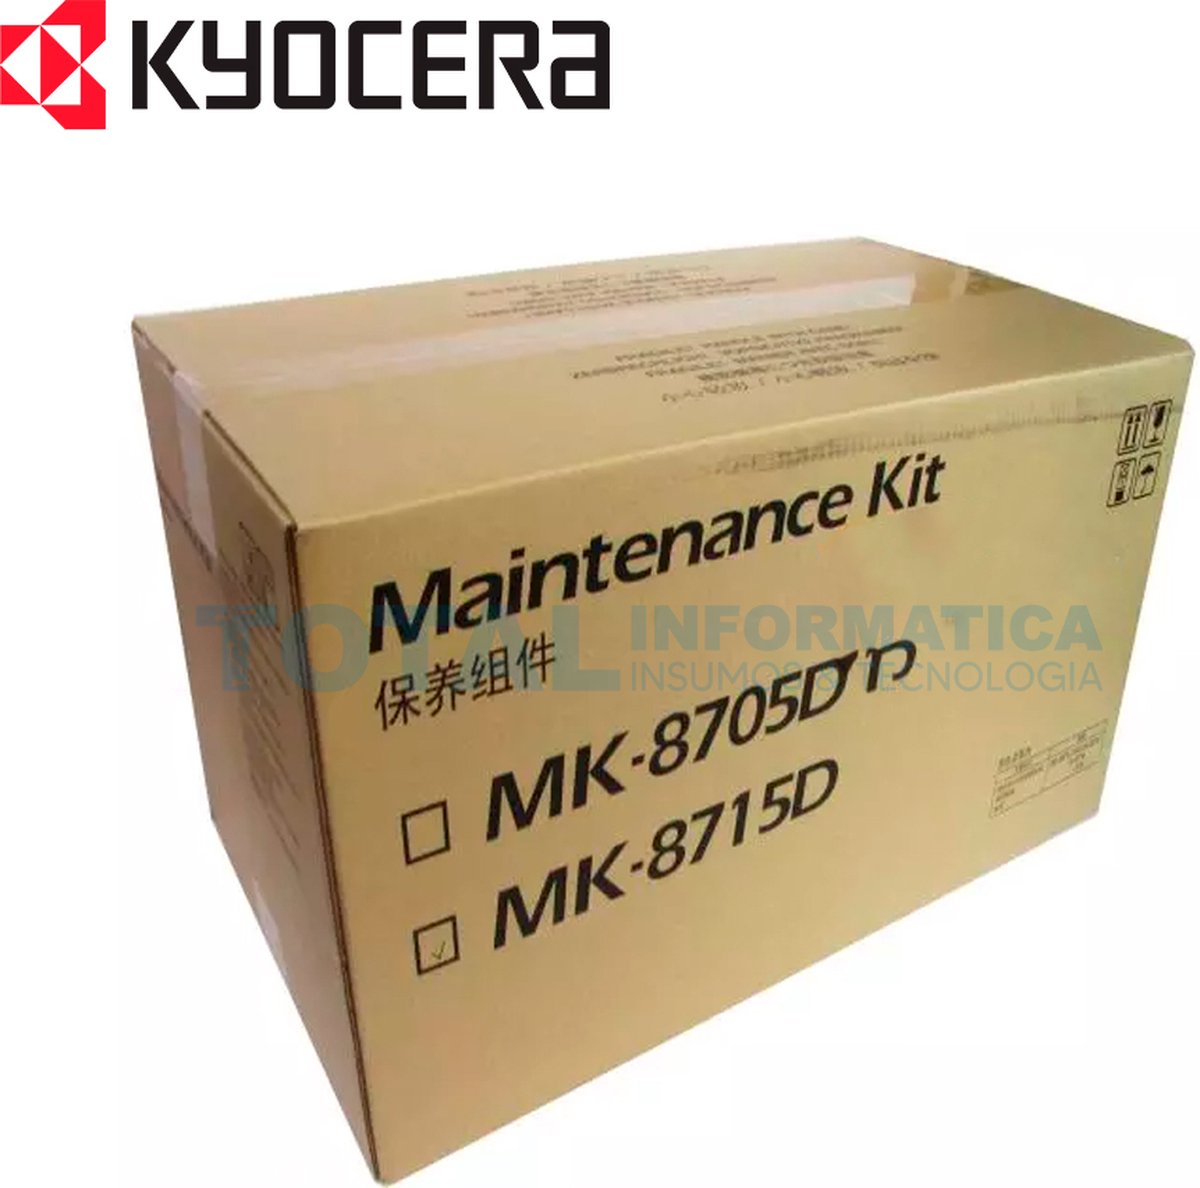 Kyocera - 1702N20UN2 - MK-8715D - Service-Kit